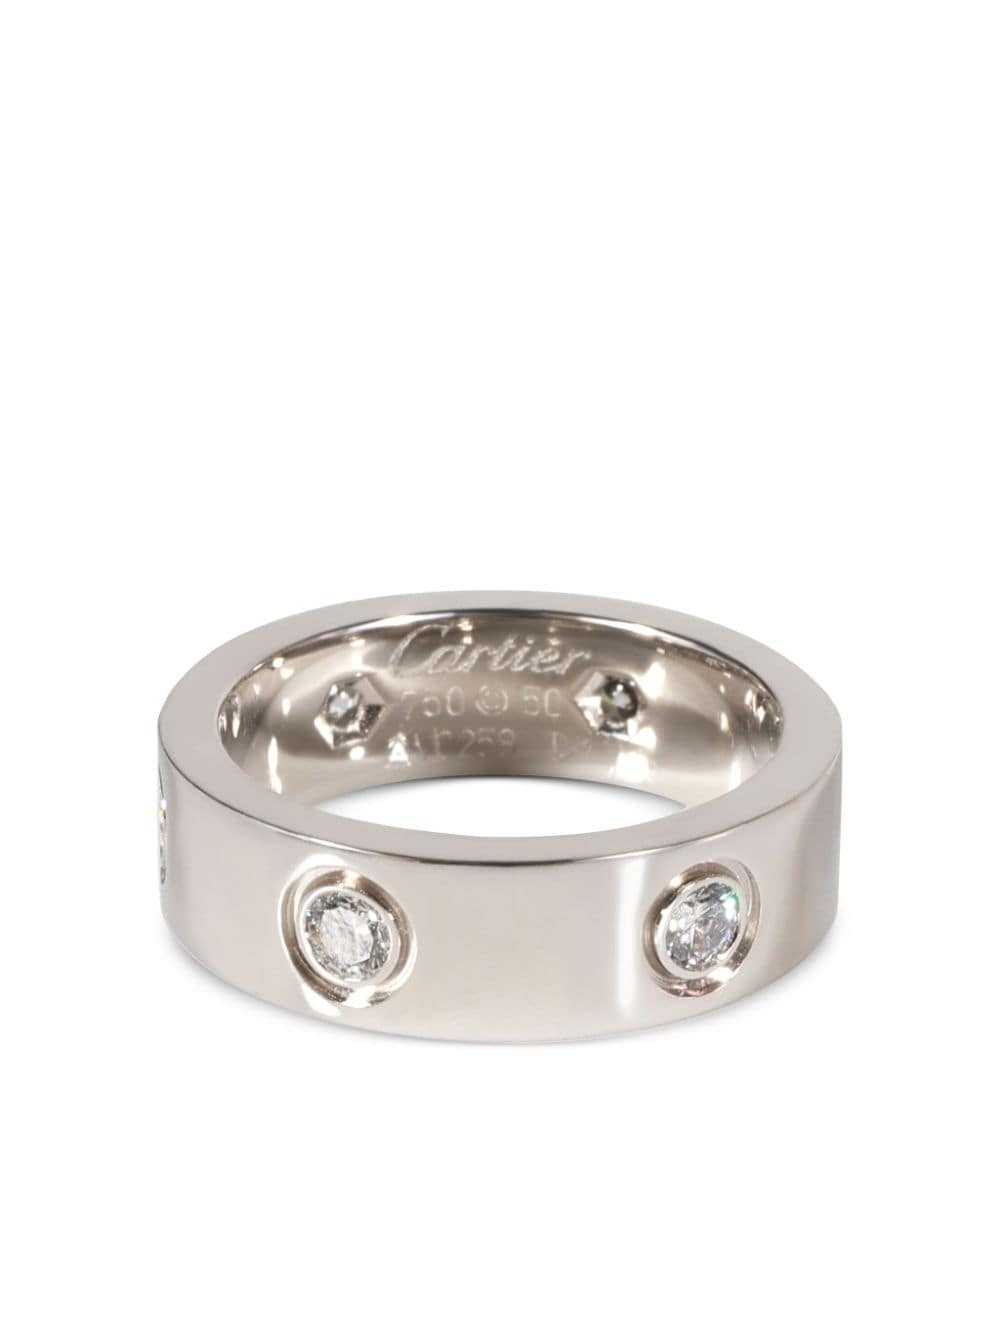 Cartier Love diamond wedding band - Silver - image 1